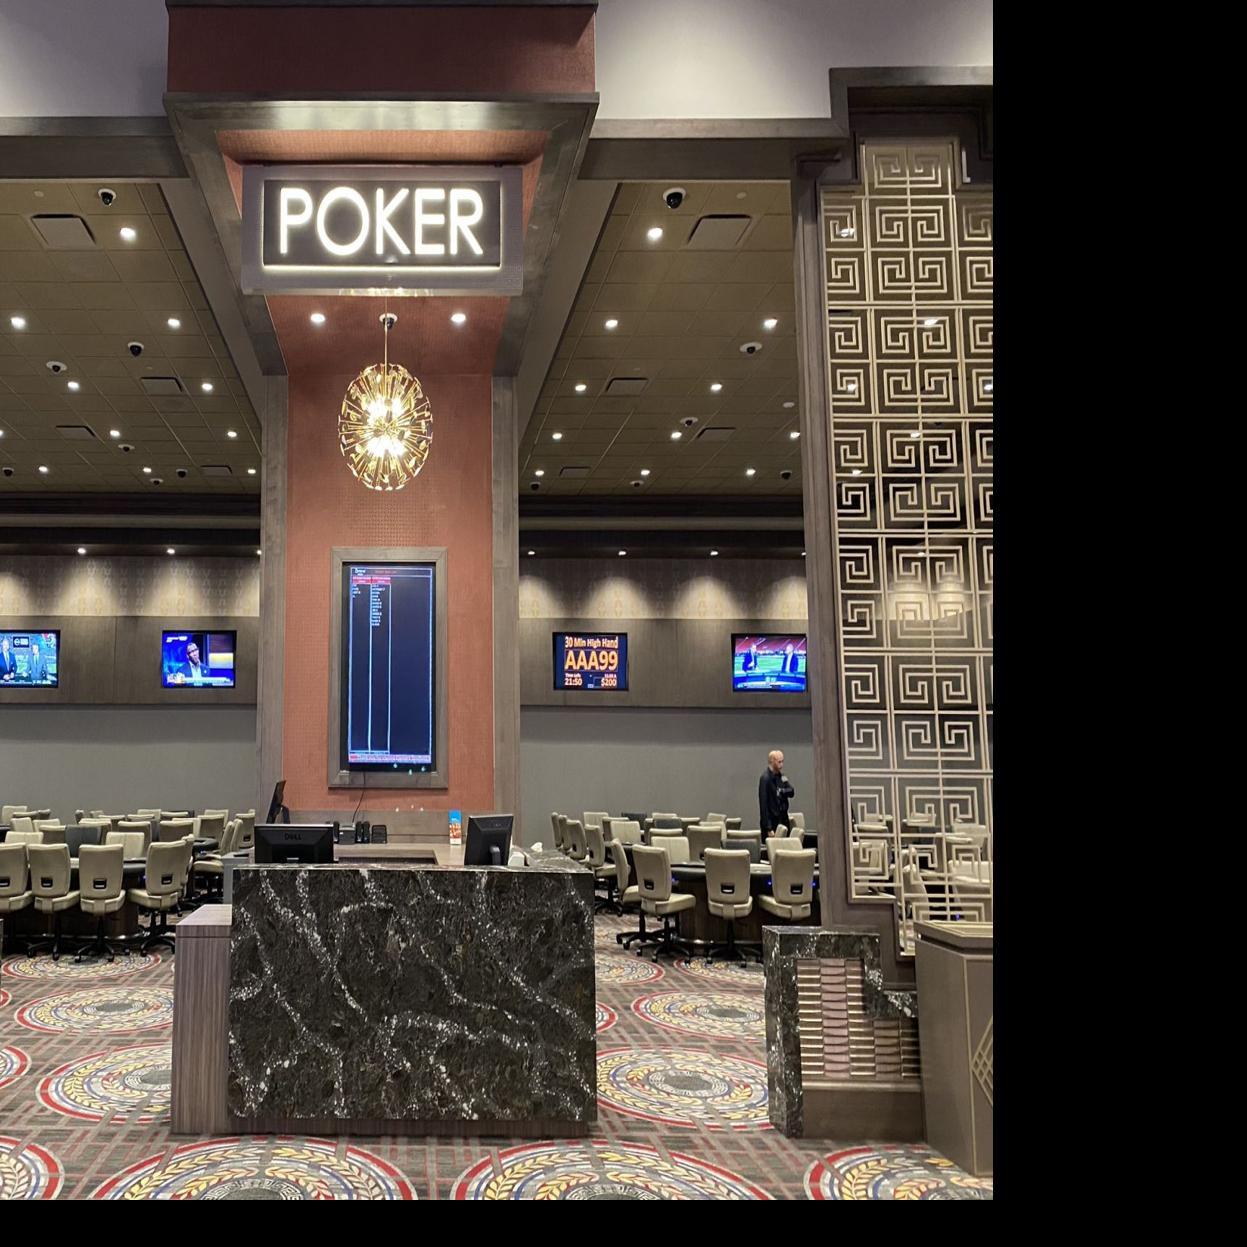 Horseshoe Southern Indiana to open new land-based casino Dec. 12